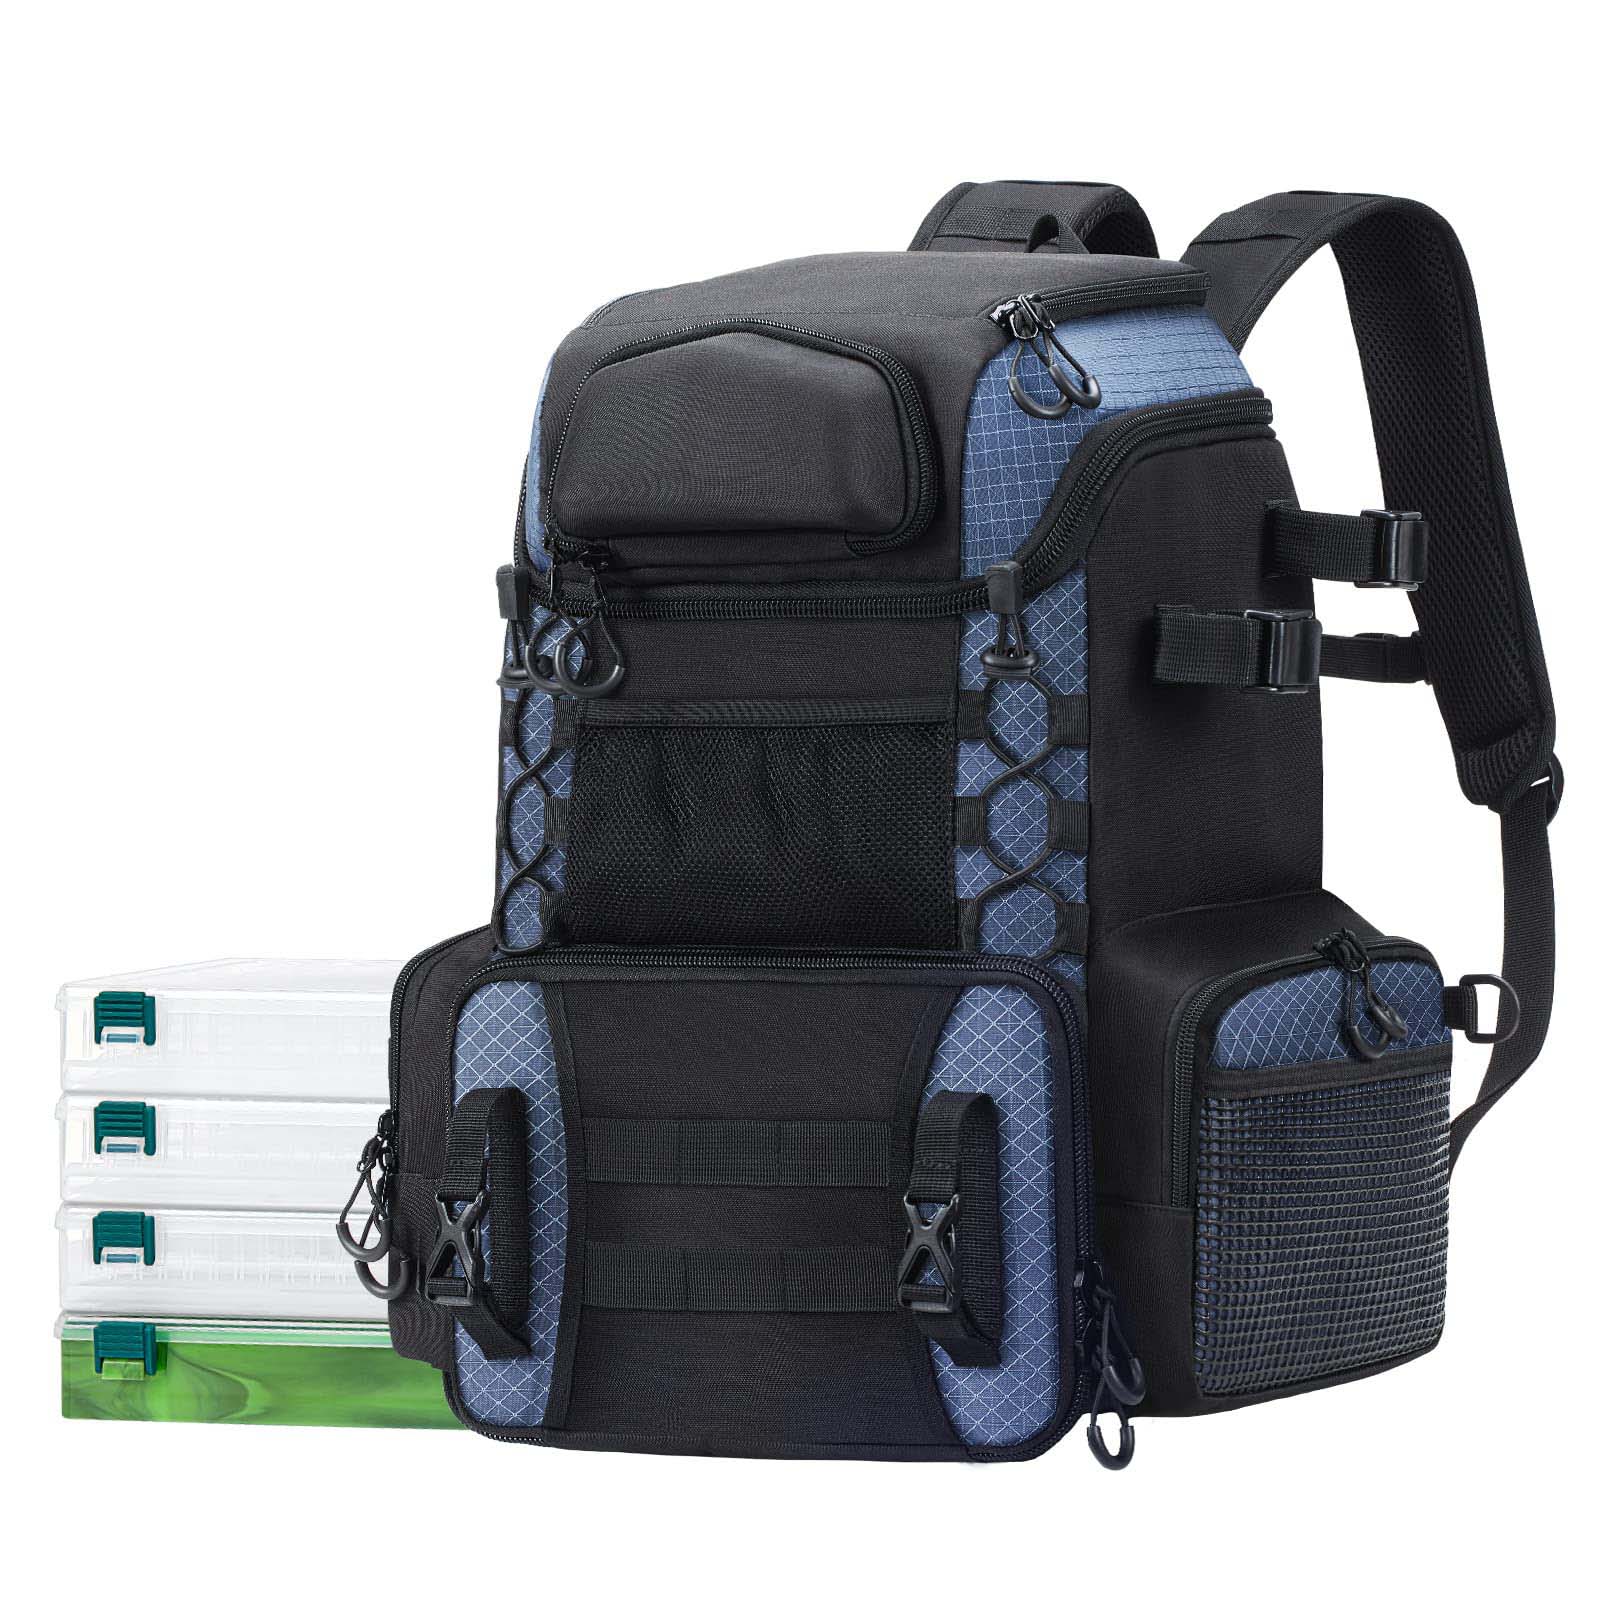 Fishing Tackle Backpack, Fishing Bag Large Capacity with Protective Rain Cover